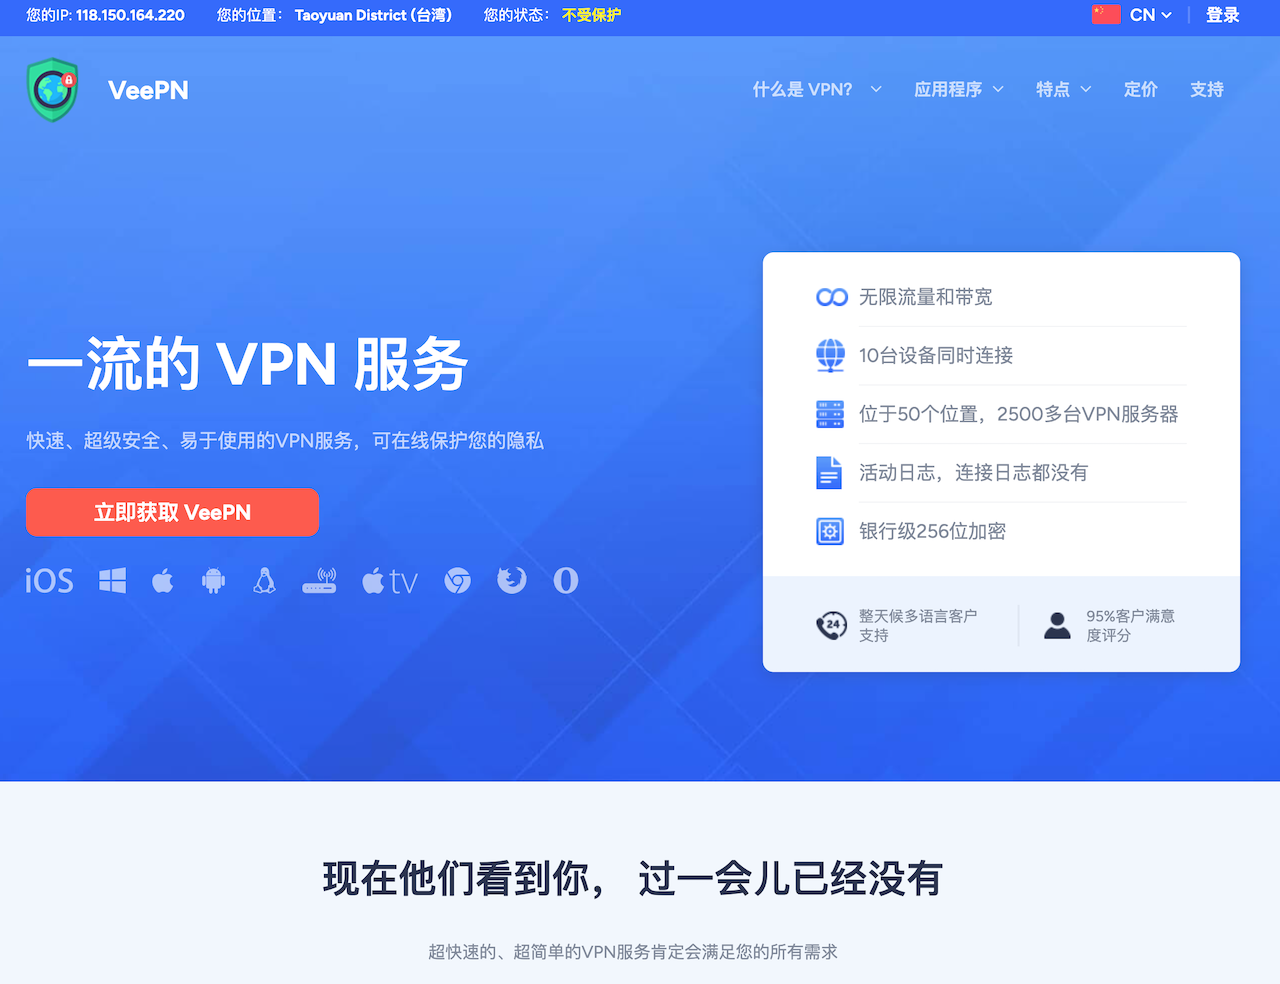 VeePN VPN Chrome瀏覽器外掛工具體驗 增加上網安全性、完成跳板動作